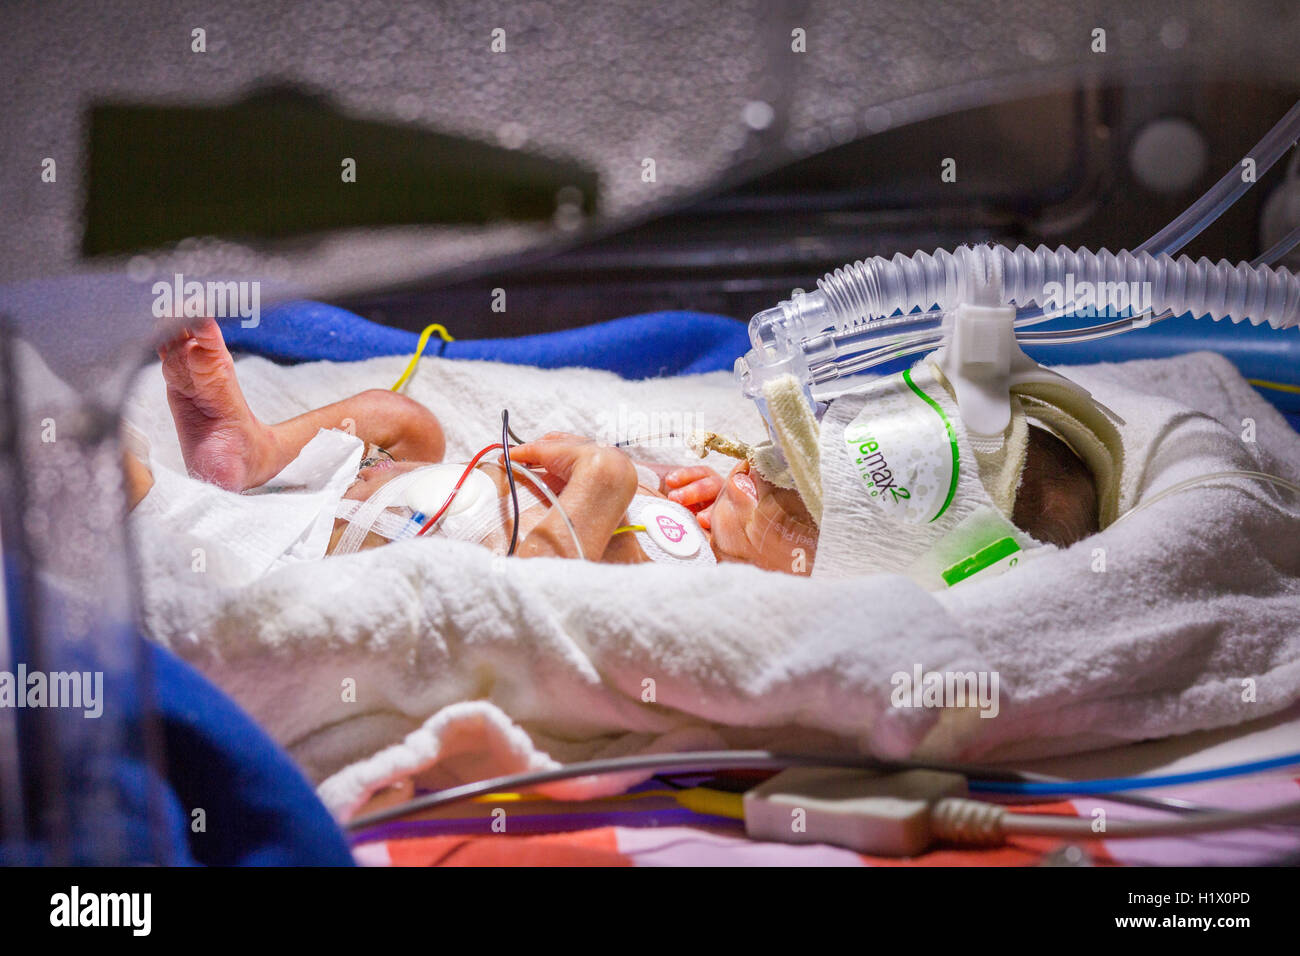 Premature newborn baby undergoing ultraviolet light treatment for jaundice. Stock Photo